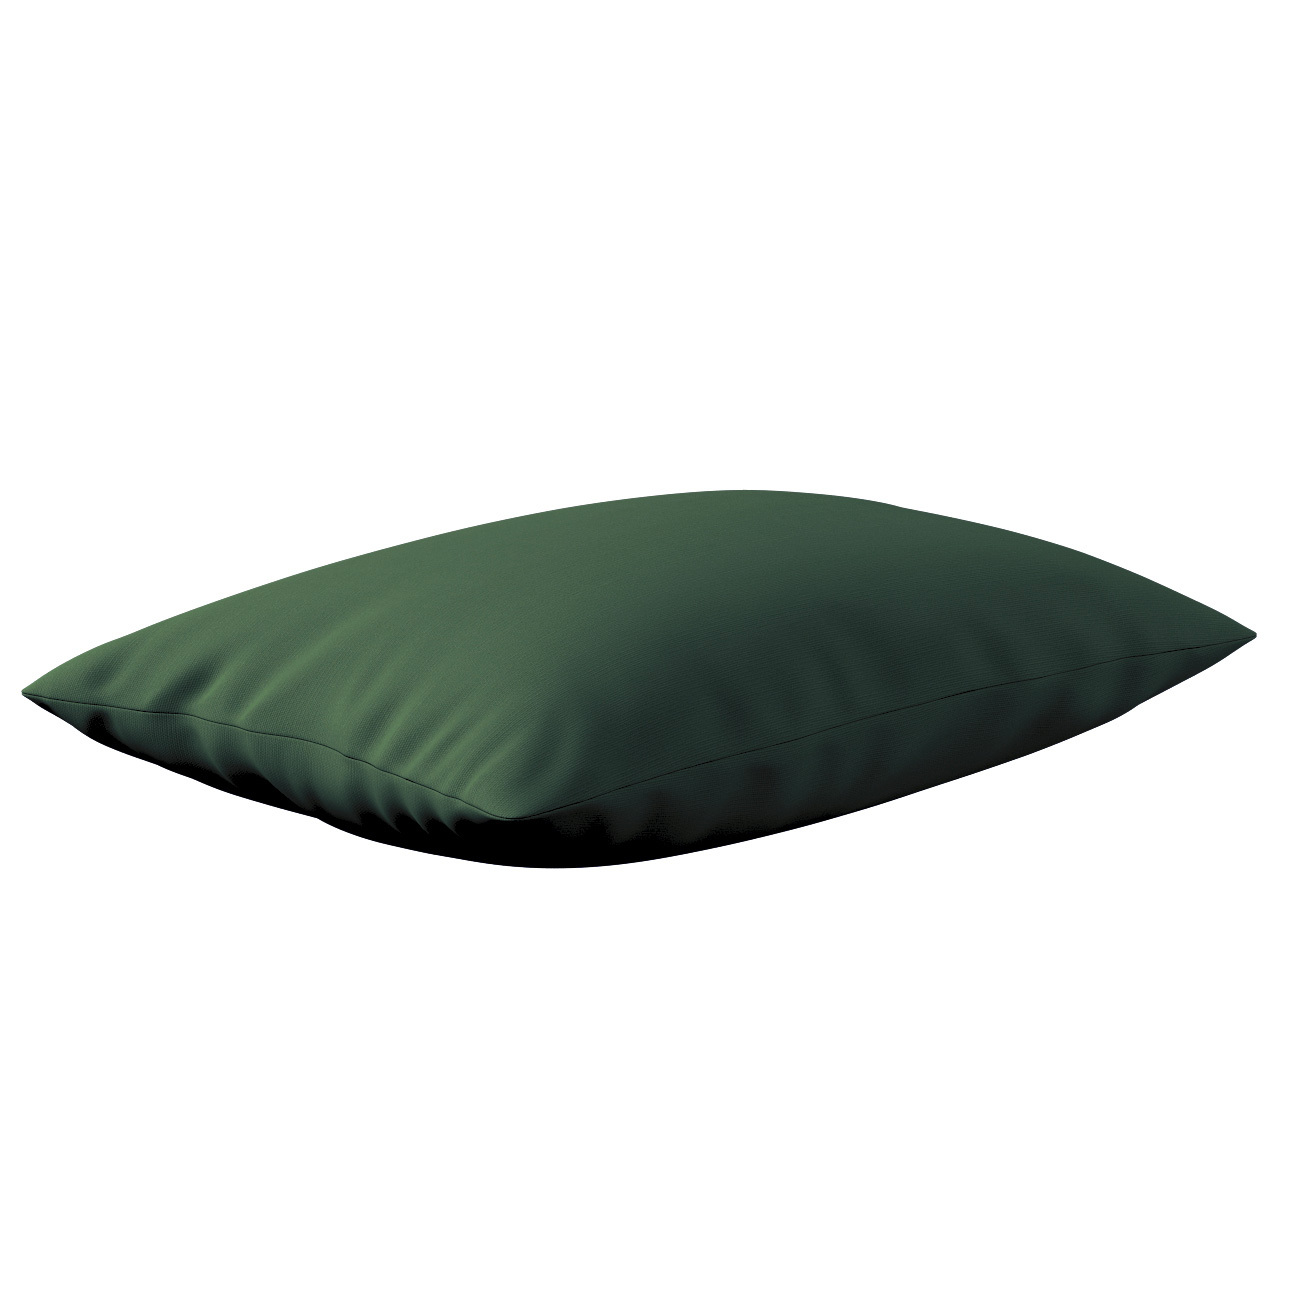 Kissenhülle Kinga rechteckig, waldgrün, 47 x 28 cm, Cotton Panama (702-06) günstig online kaufen